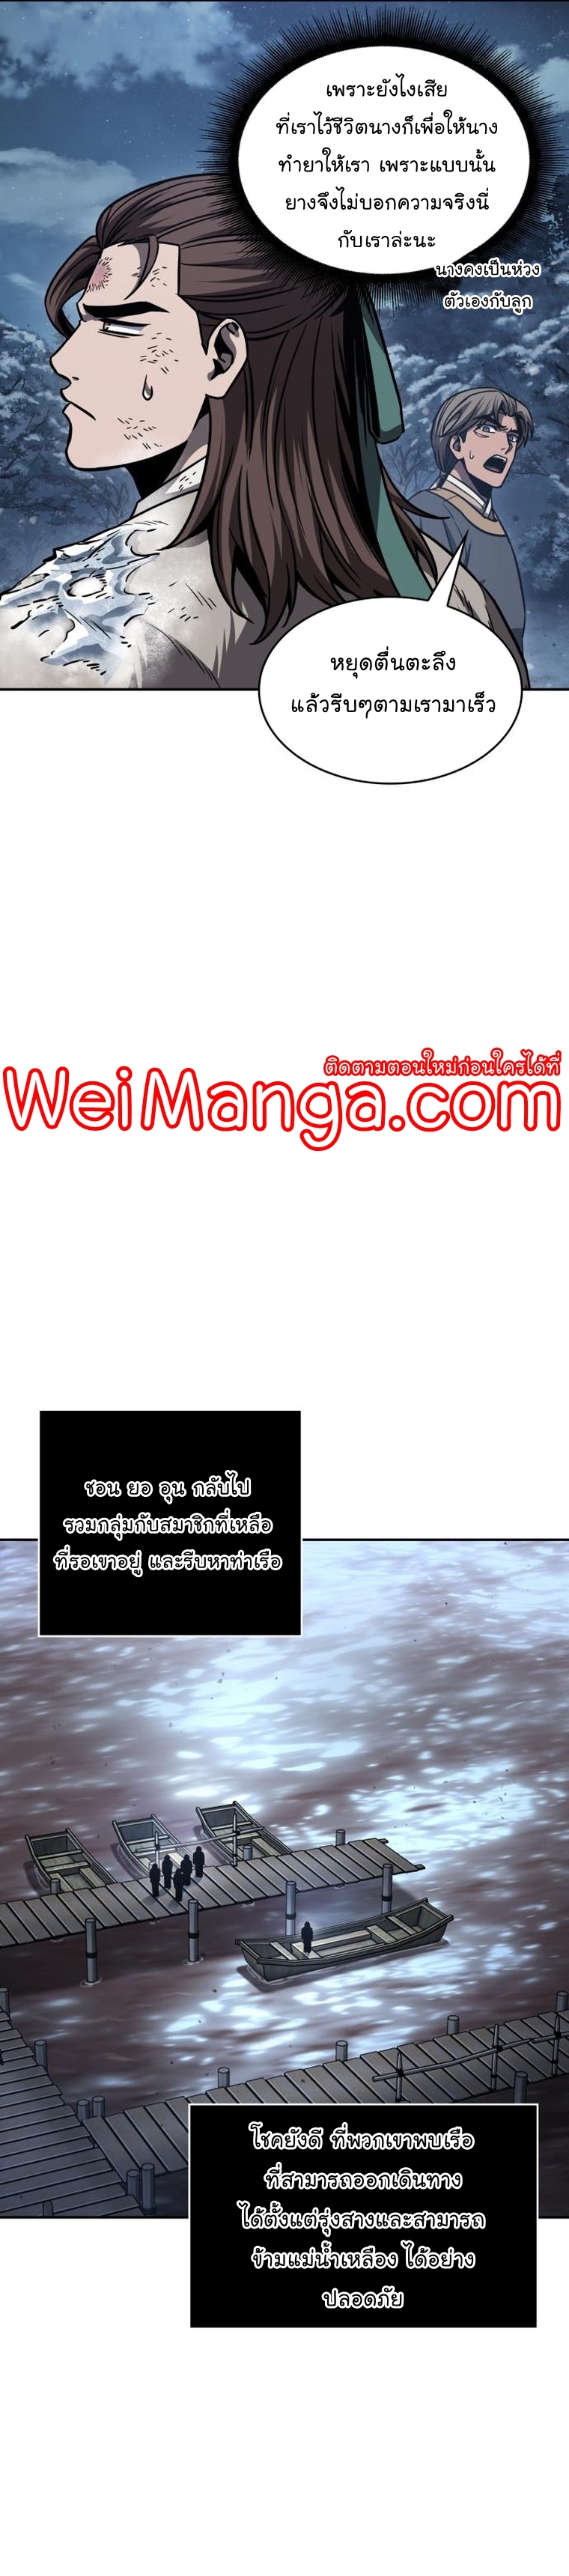 Nano Machine Wei Manga Manwha 170 (13)